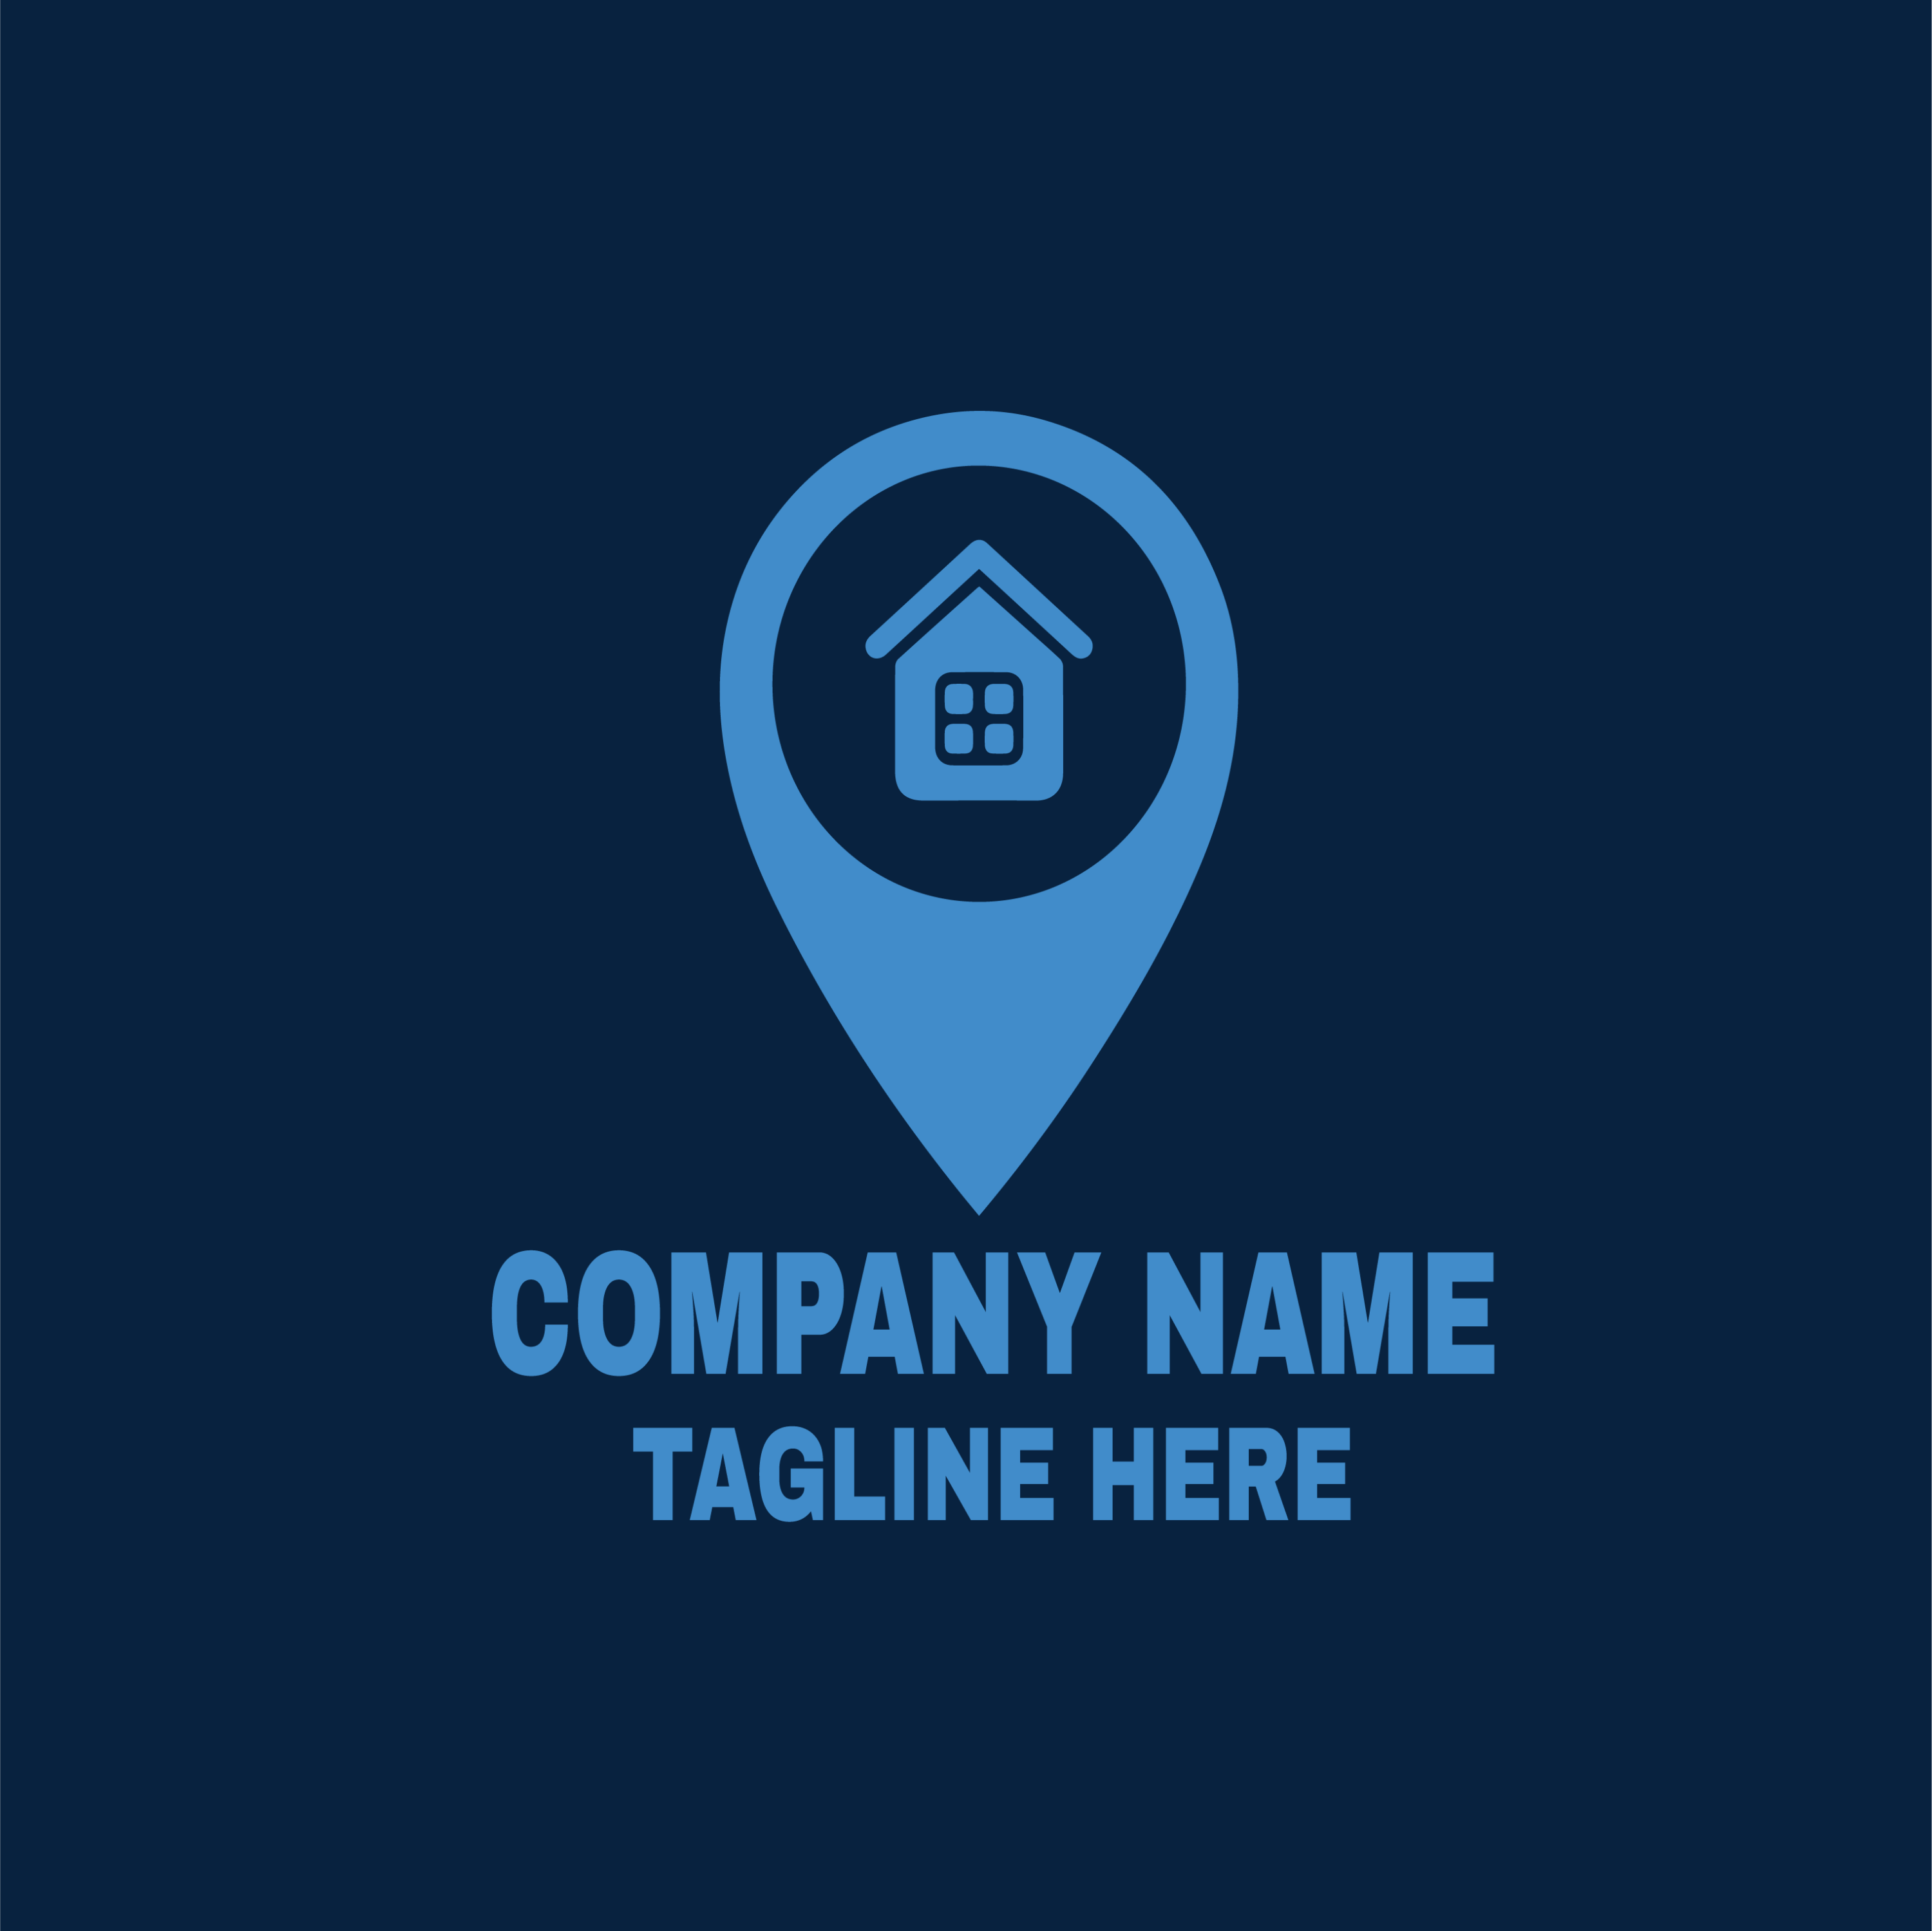 Cool Real Estate & Home Logo Template, blue logo on dark blue background.